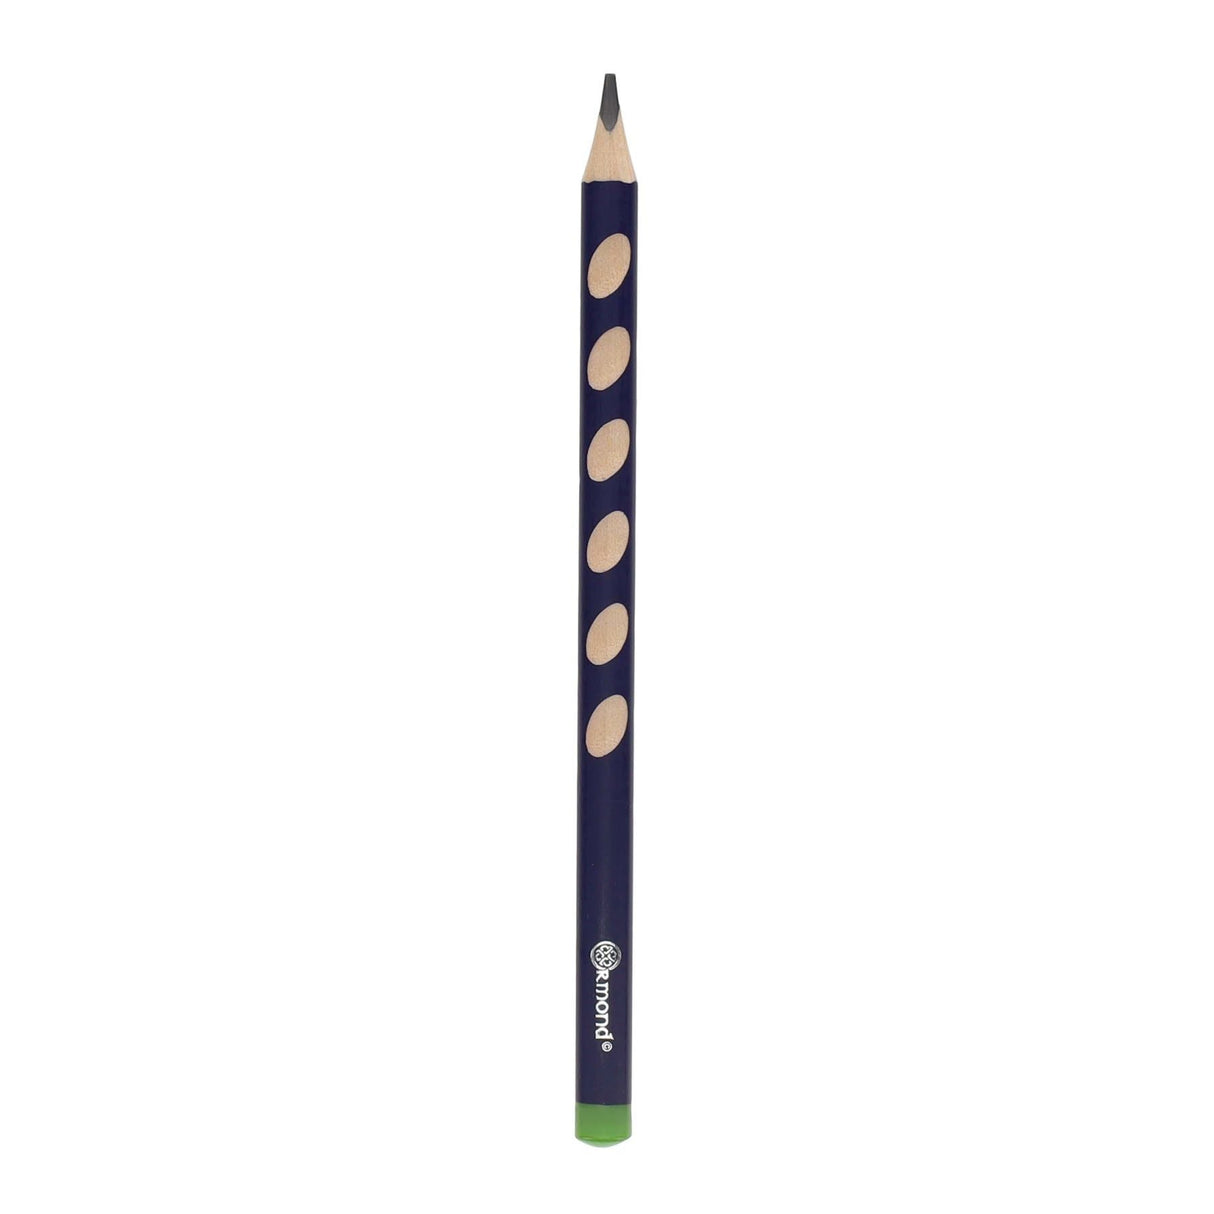 Ormond Finger Fit Triangular Pencil - HB-Pencils-Ormond|StationeryShop.co.uk